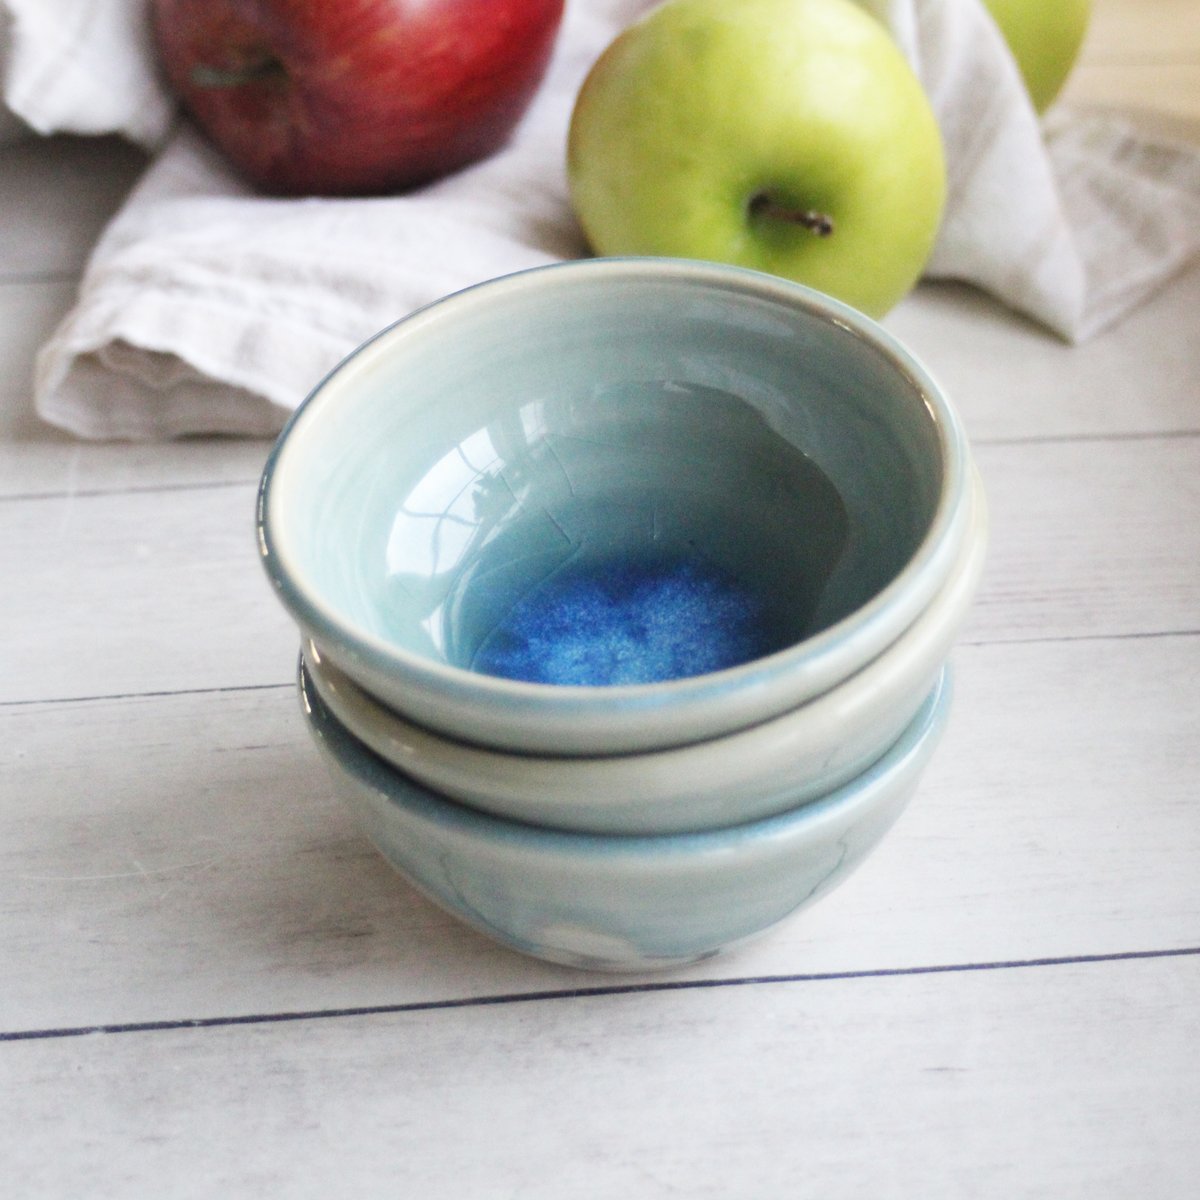 Small Ceramic Bowls with Grey and Blue Glaze (Pair) - Medewi Bay